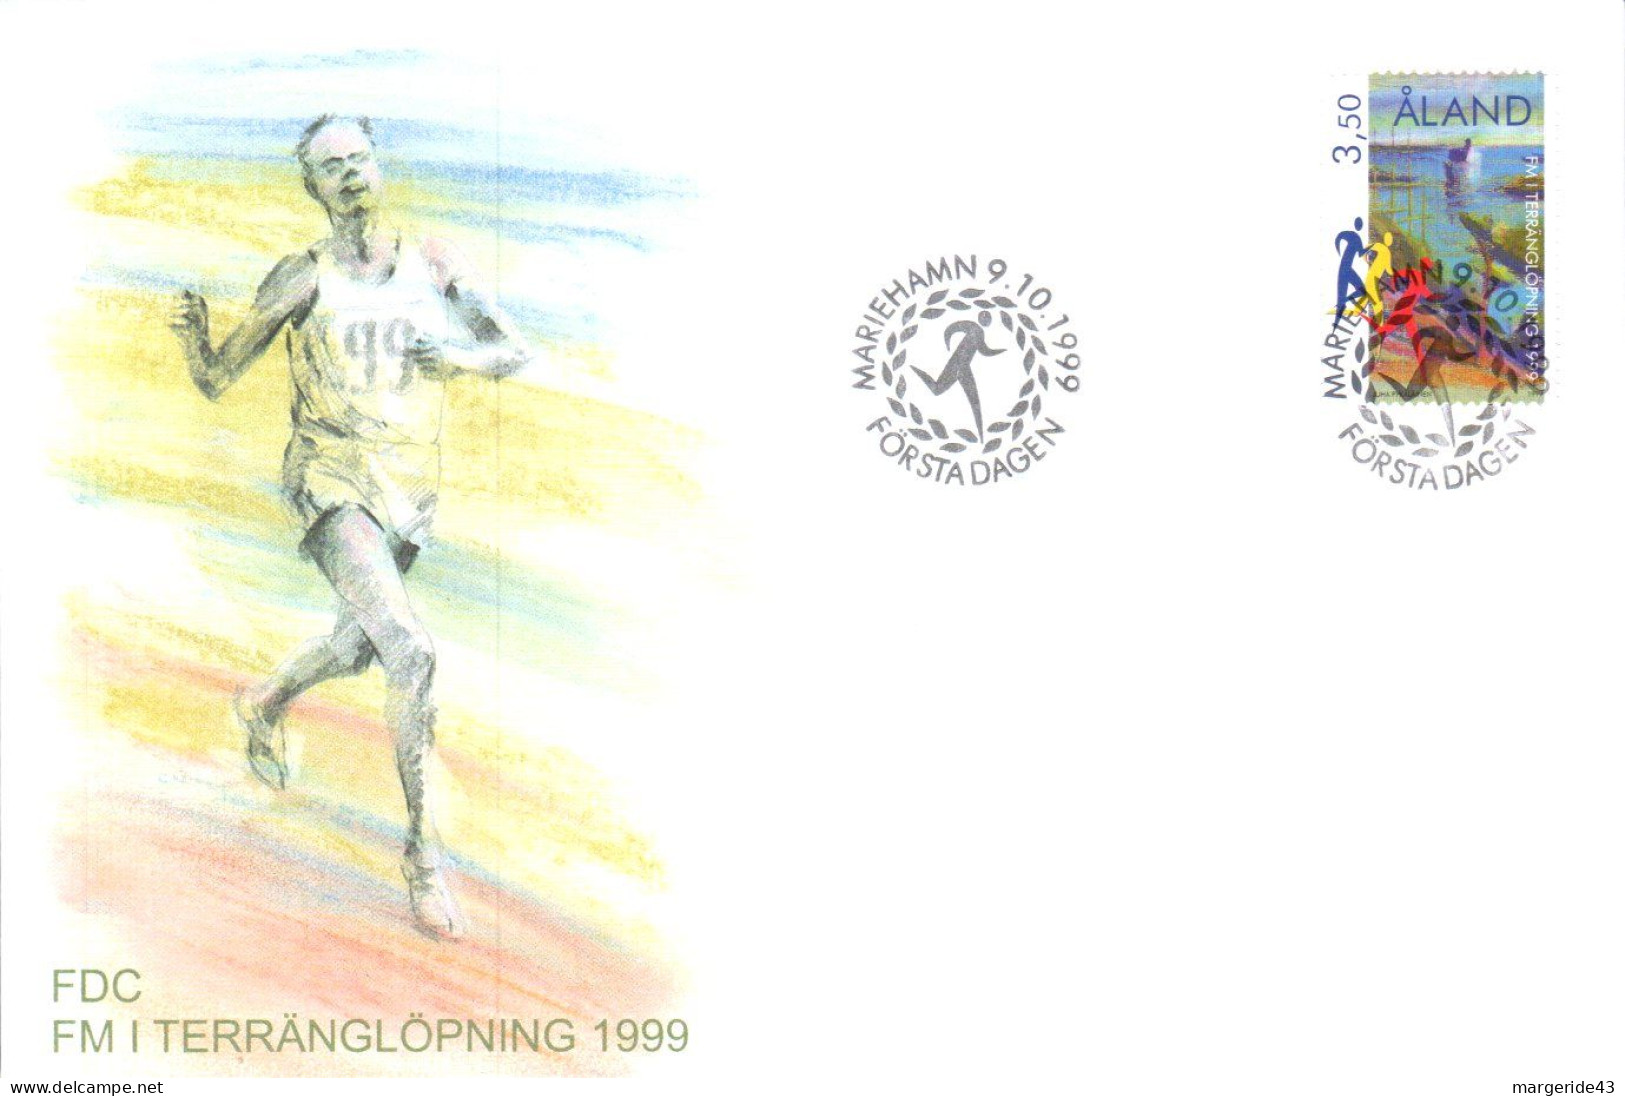 ALAND FDC 1999 CHAMPIONNTS FINLANDAIS DE CROSS COUNTRY - Aland